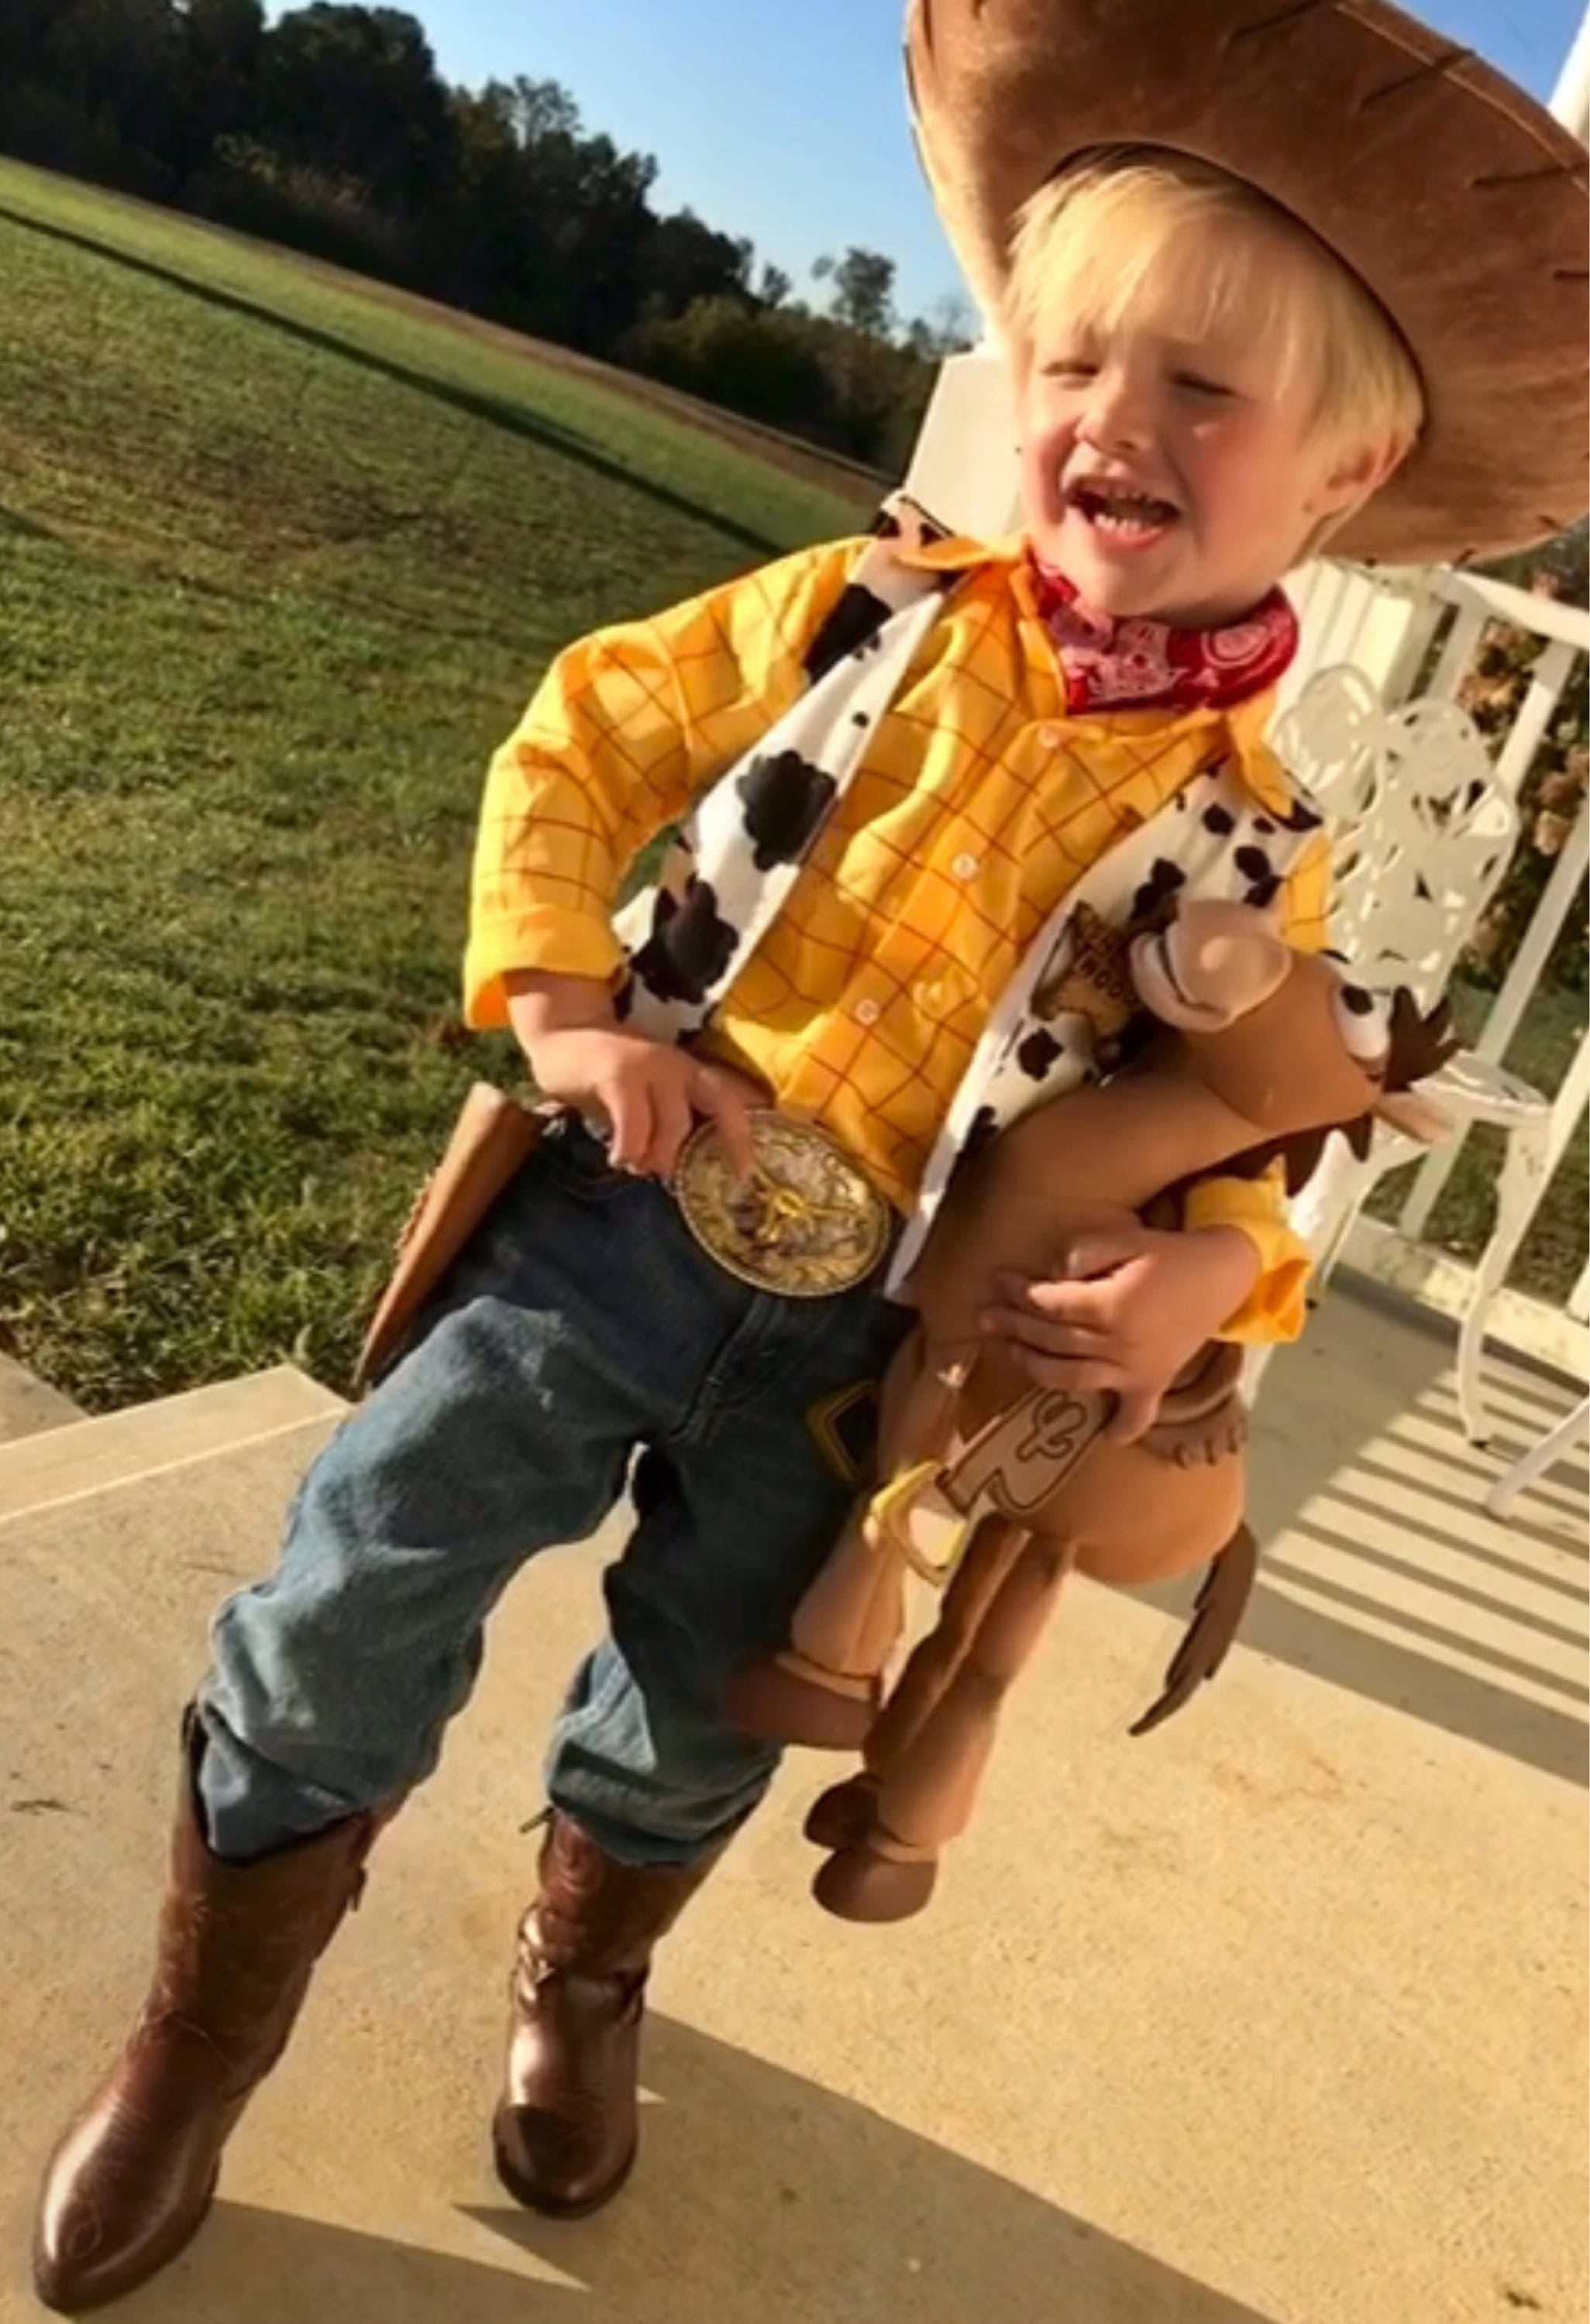 Sheriff Woody Costume Hoodie for Boys